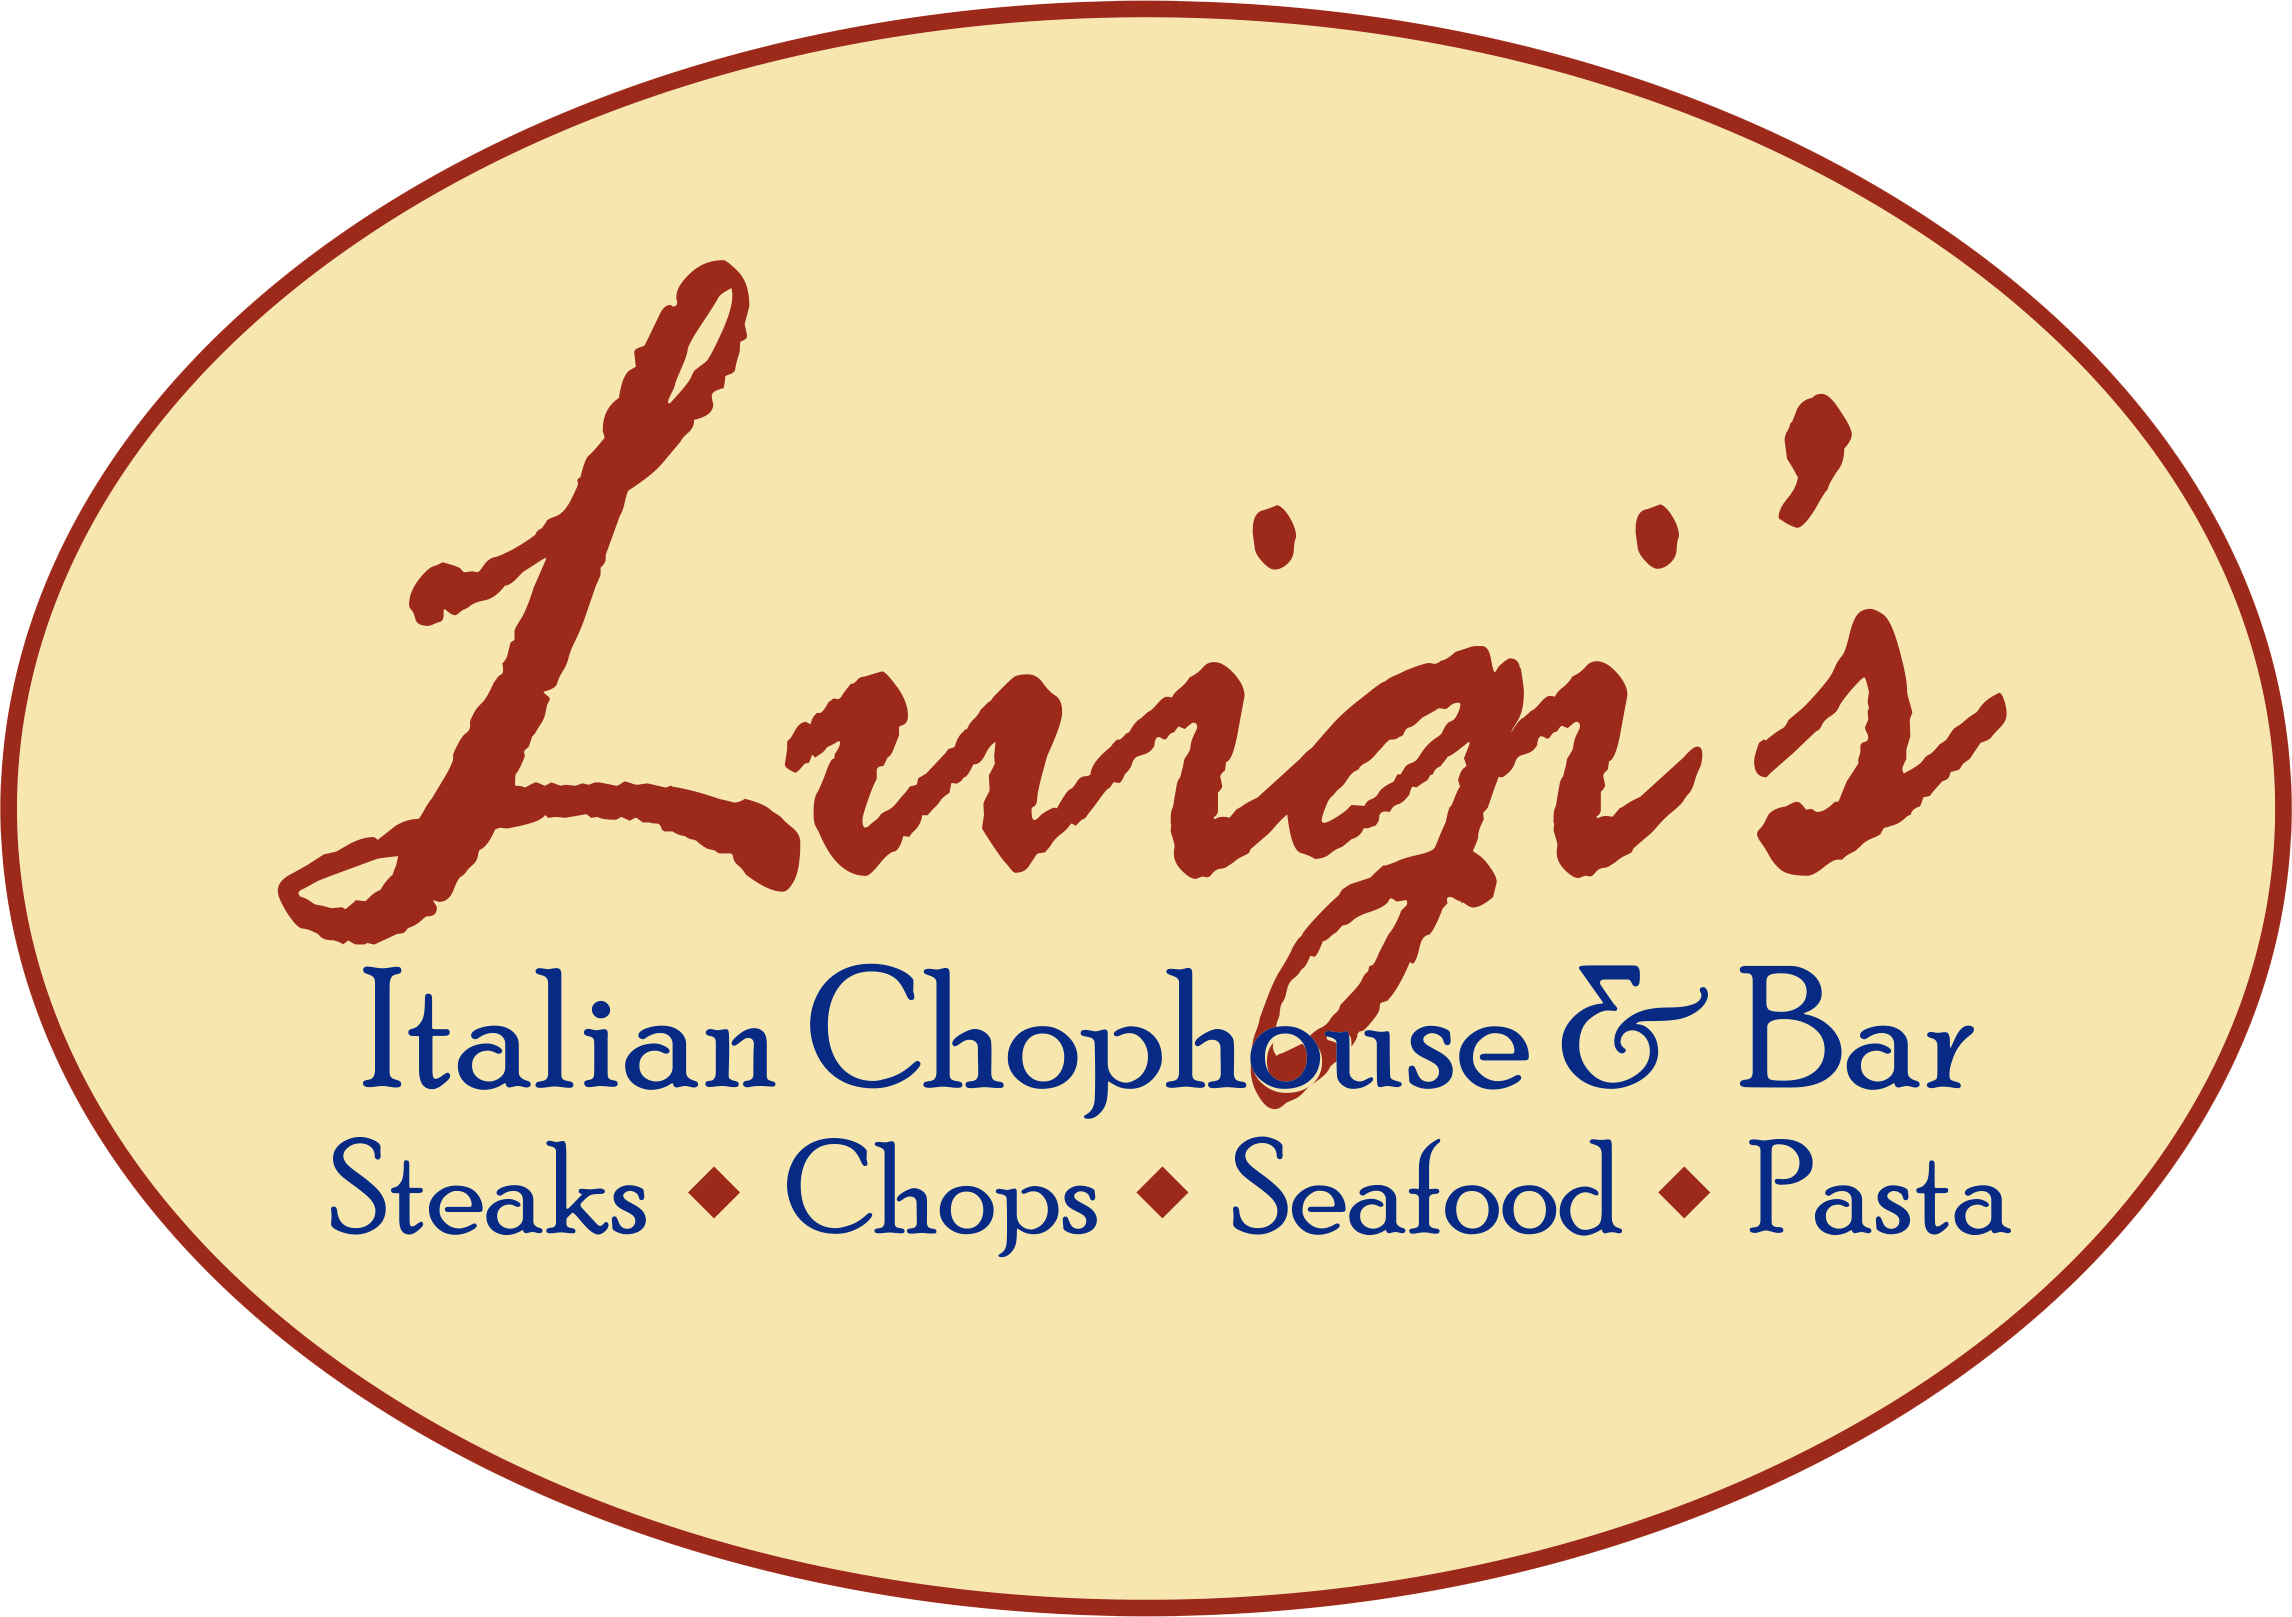 Luigi's Italian Chophouse and Bar - Homepage